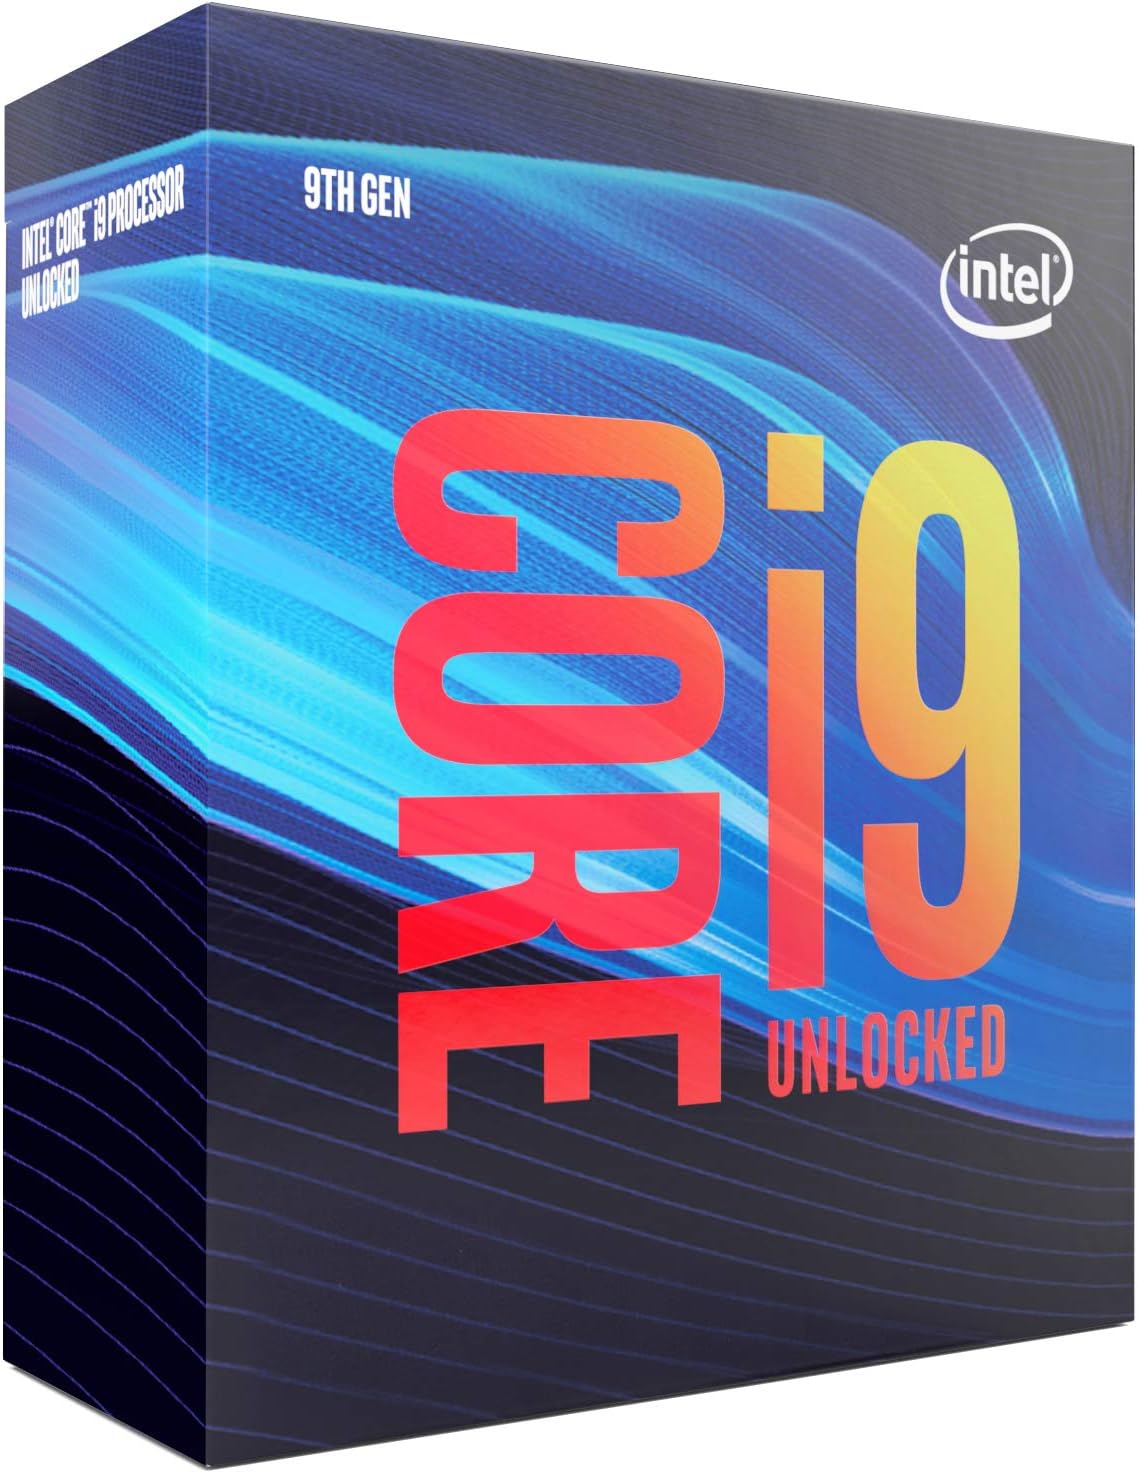 Intel Core i9-9900K Desktop Processor 8 Cores up to 5.0GHz Unlocked LGA1151 300 Series 95W (BX806849900K)